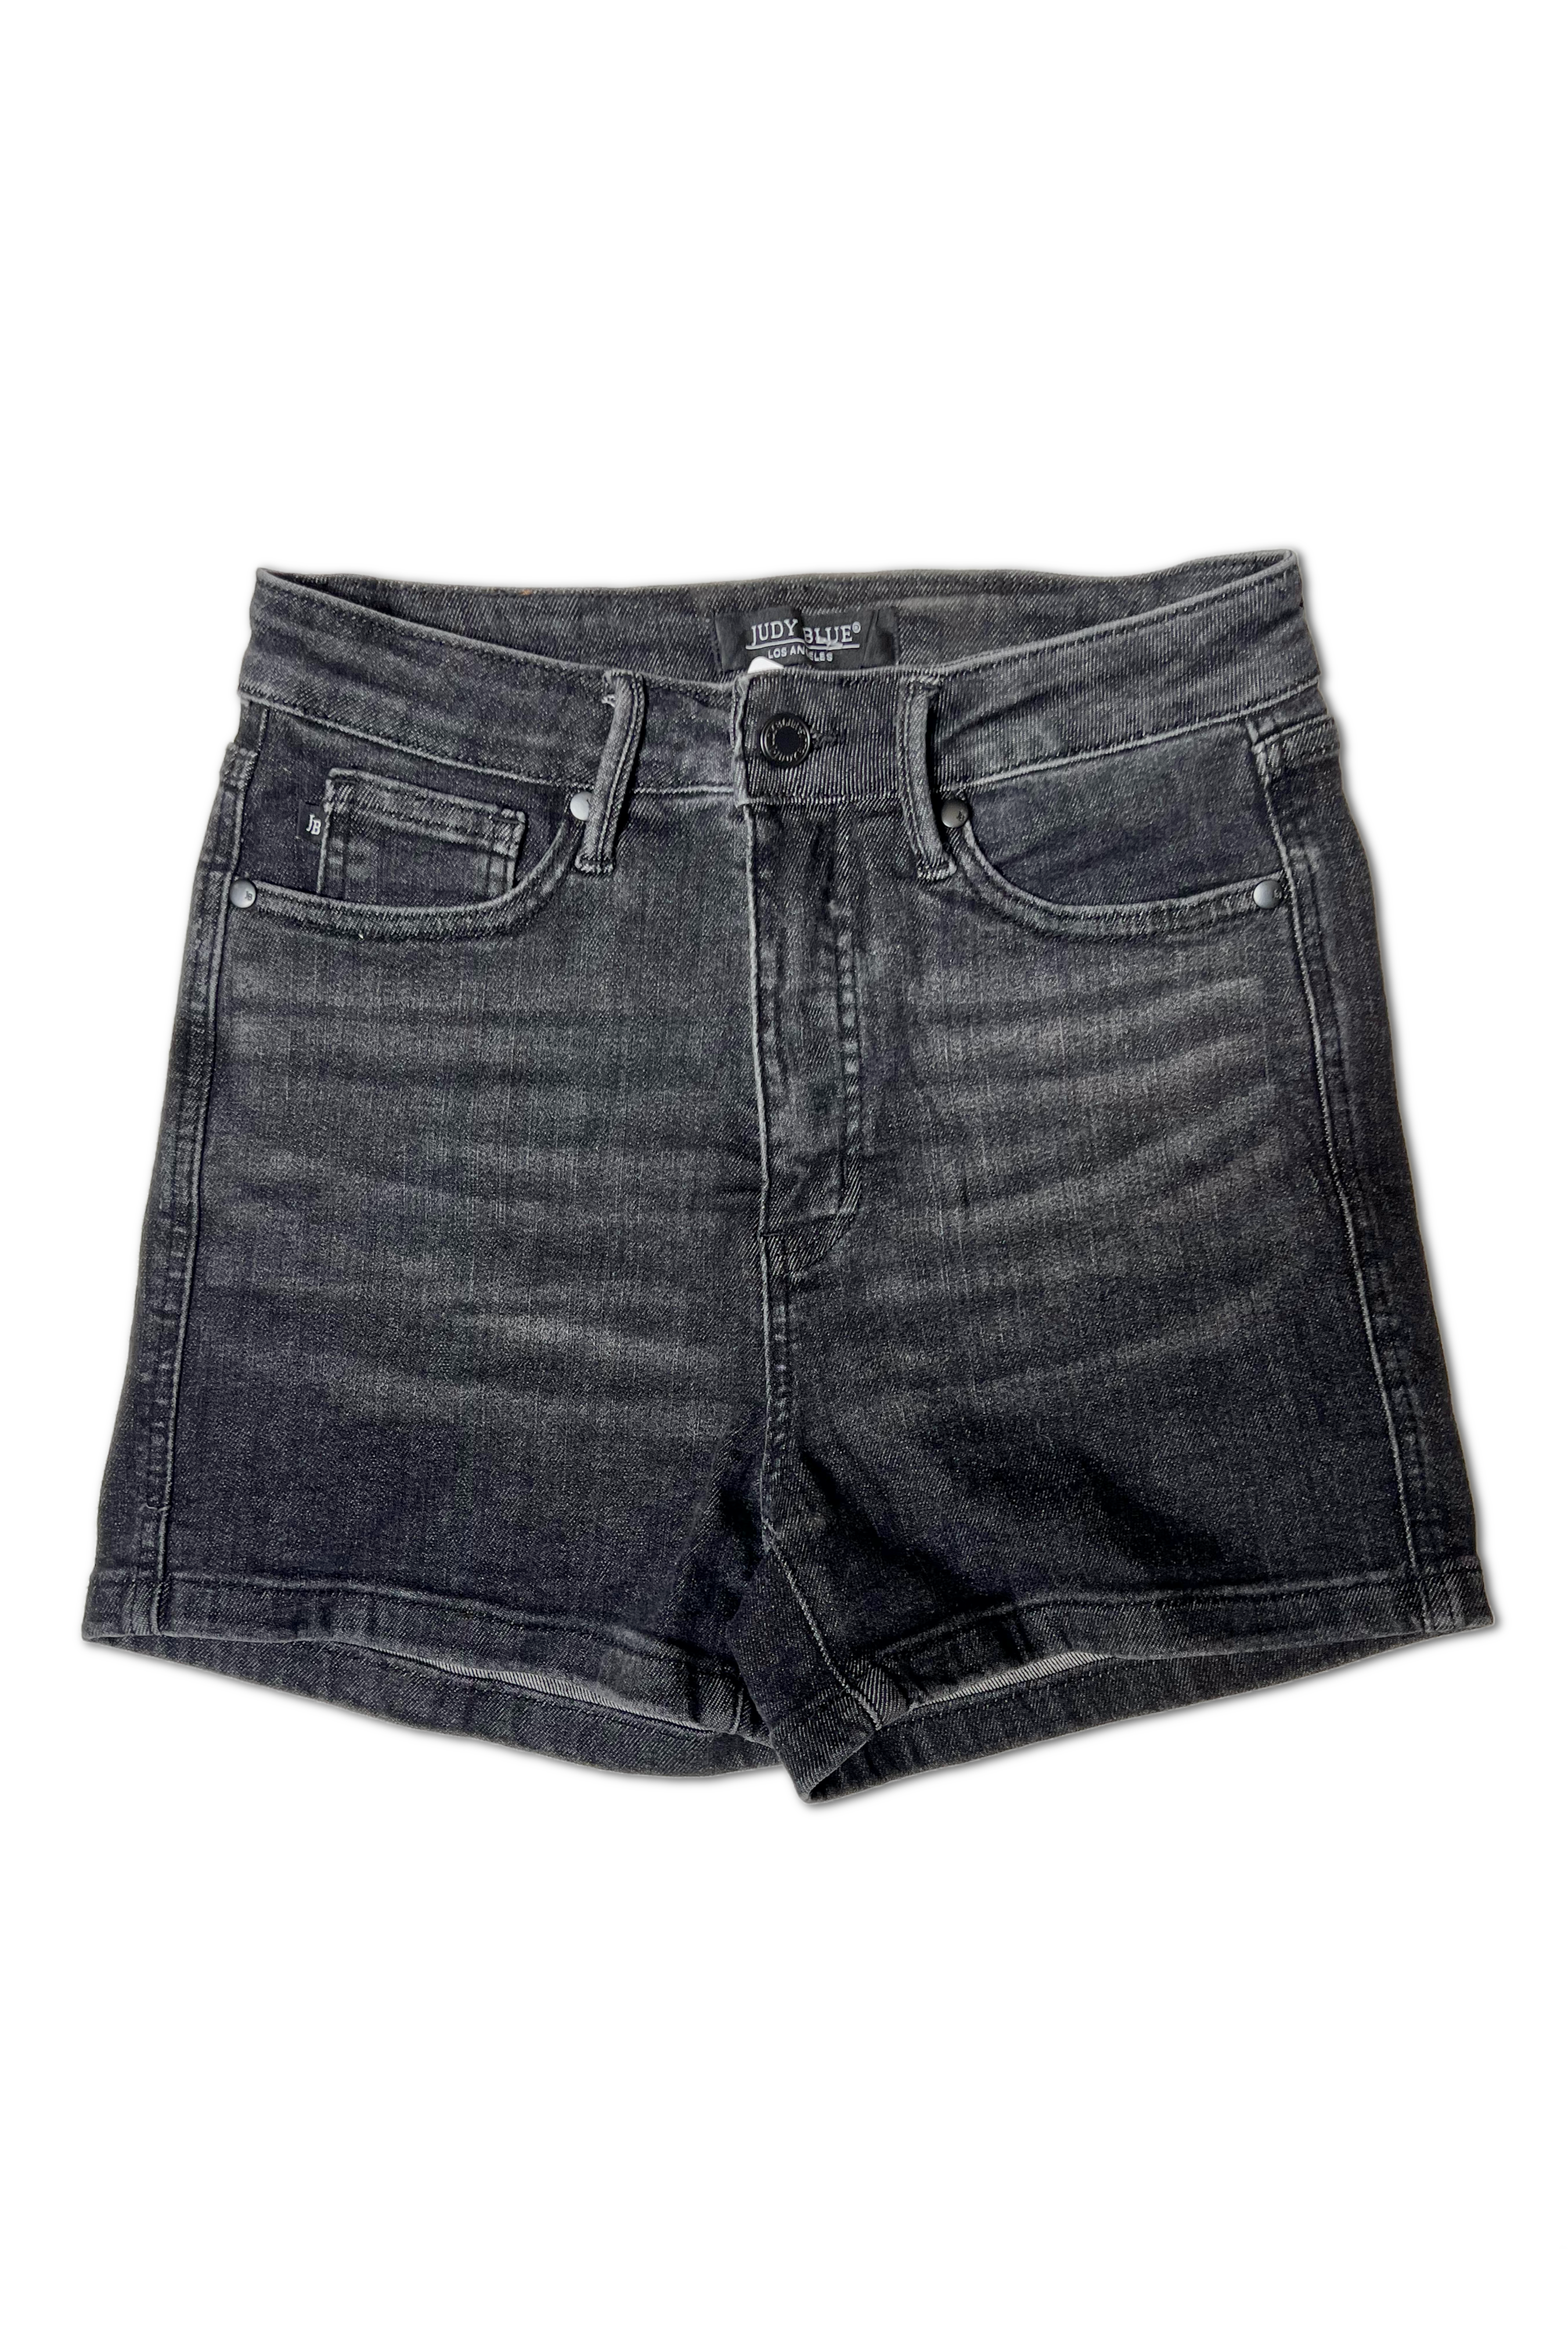 Fade Into You - Judy Blue Tummy Control Shorts-Shorts-JB Boutique Simplified-Urban Threadz Boutique, Women's Fashion Boutique in Saugatuck, MI